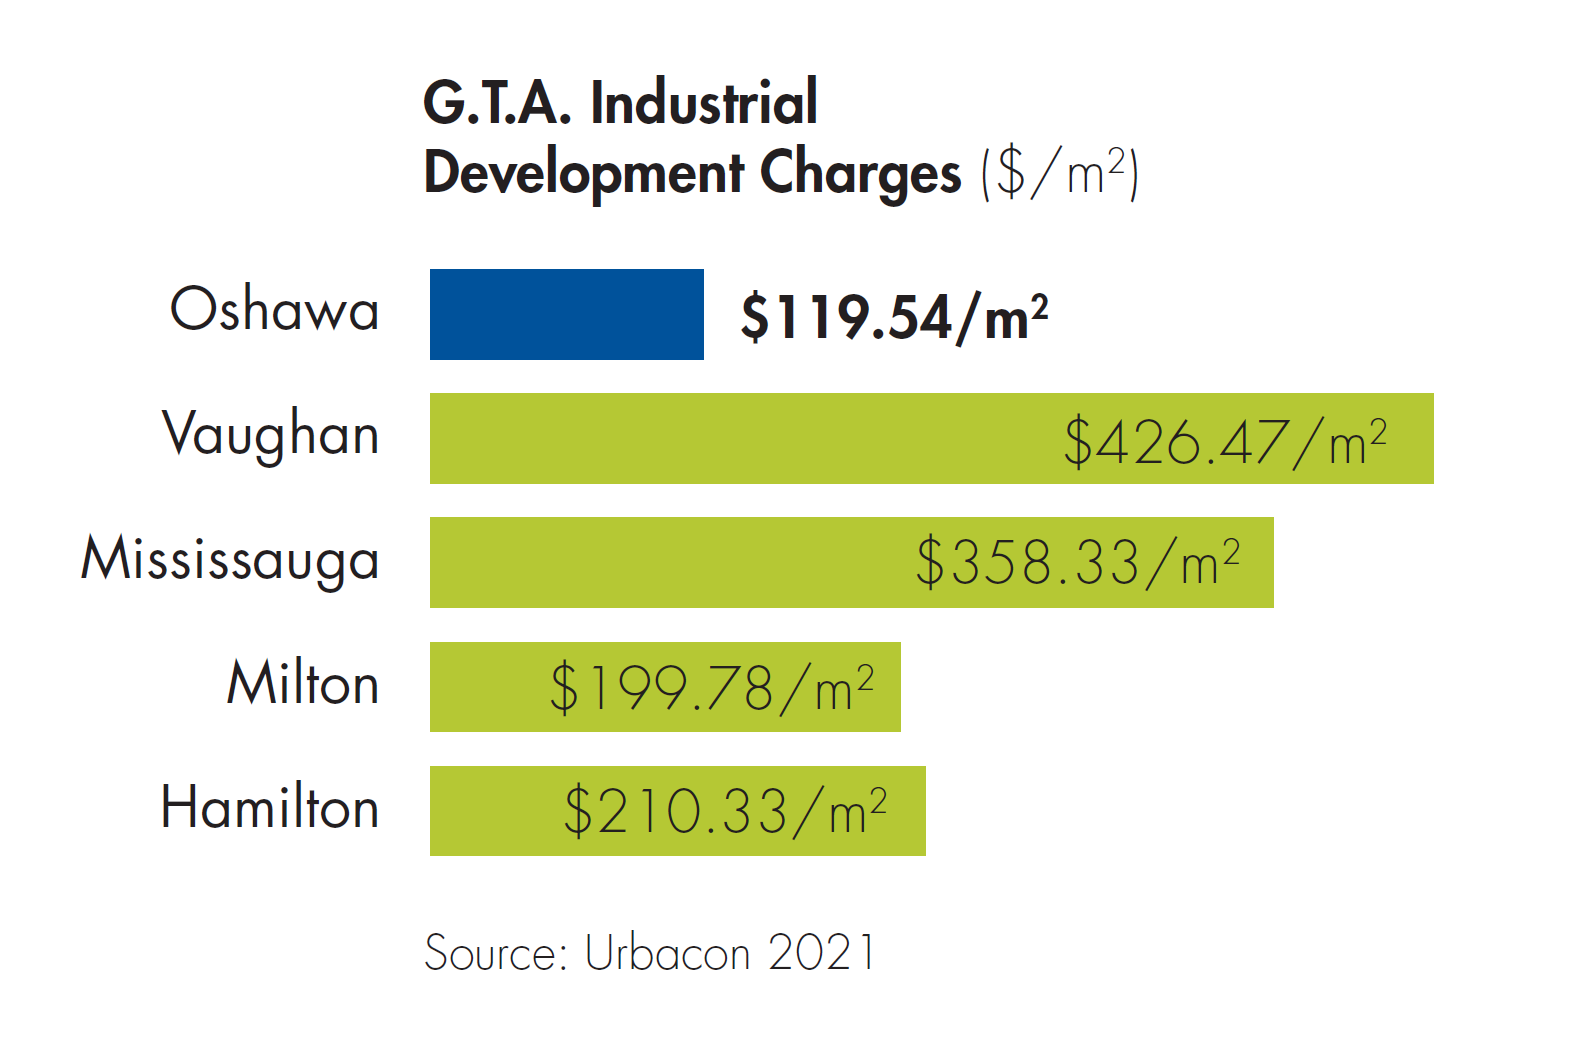 GTA Industrial charges $/square metre horizontal bar graph. Oshawa $119.54/m2, Vaughn $426.47/m2, Mississauga $358.33/m2, Milton $199.78/m2, Hamilton $210.33/m2. Source: Urbacon 2021